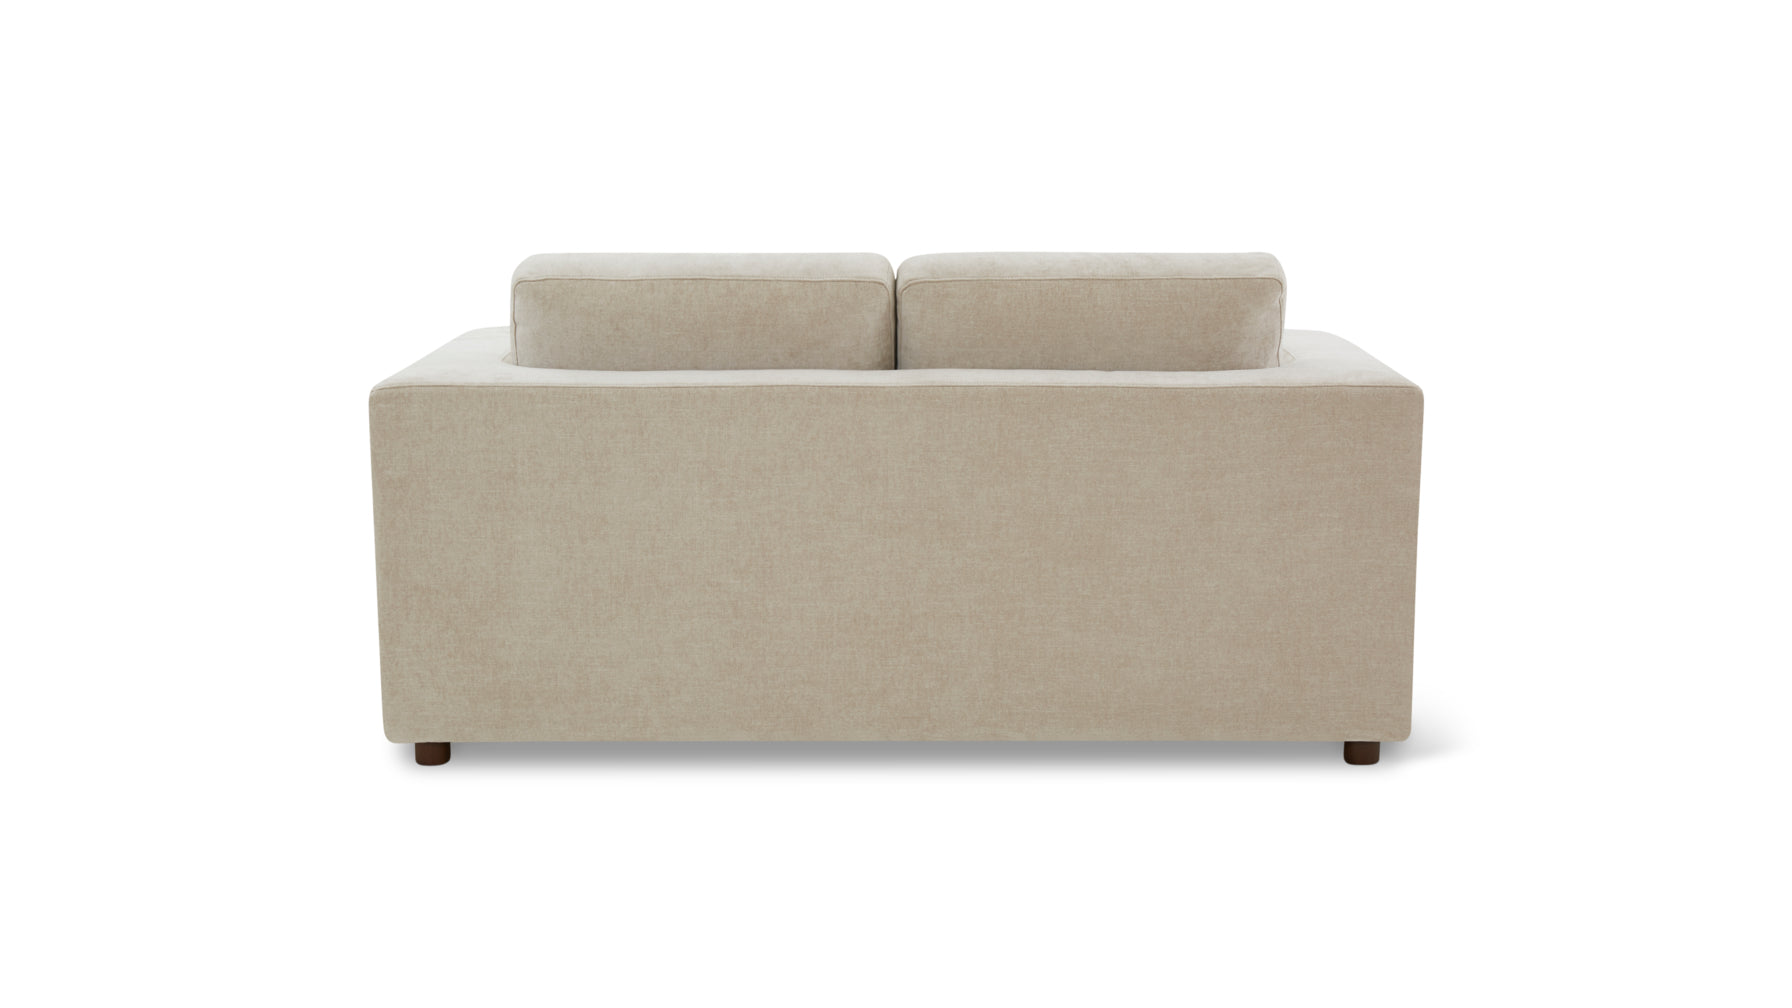 Good Company Sofa, 2 Seater, Cashew - Image 4